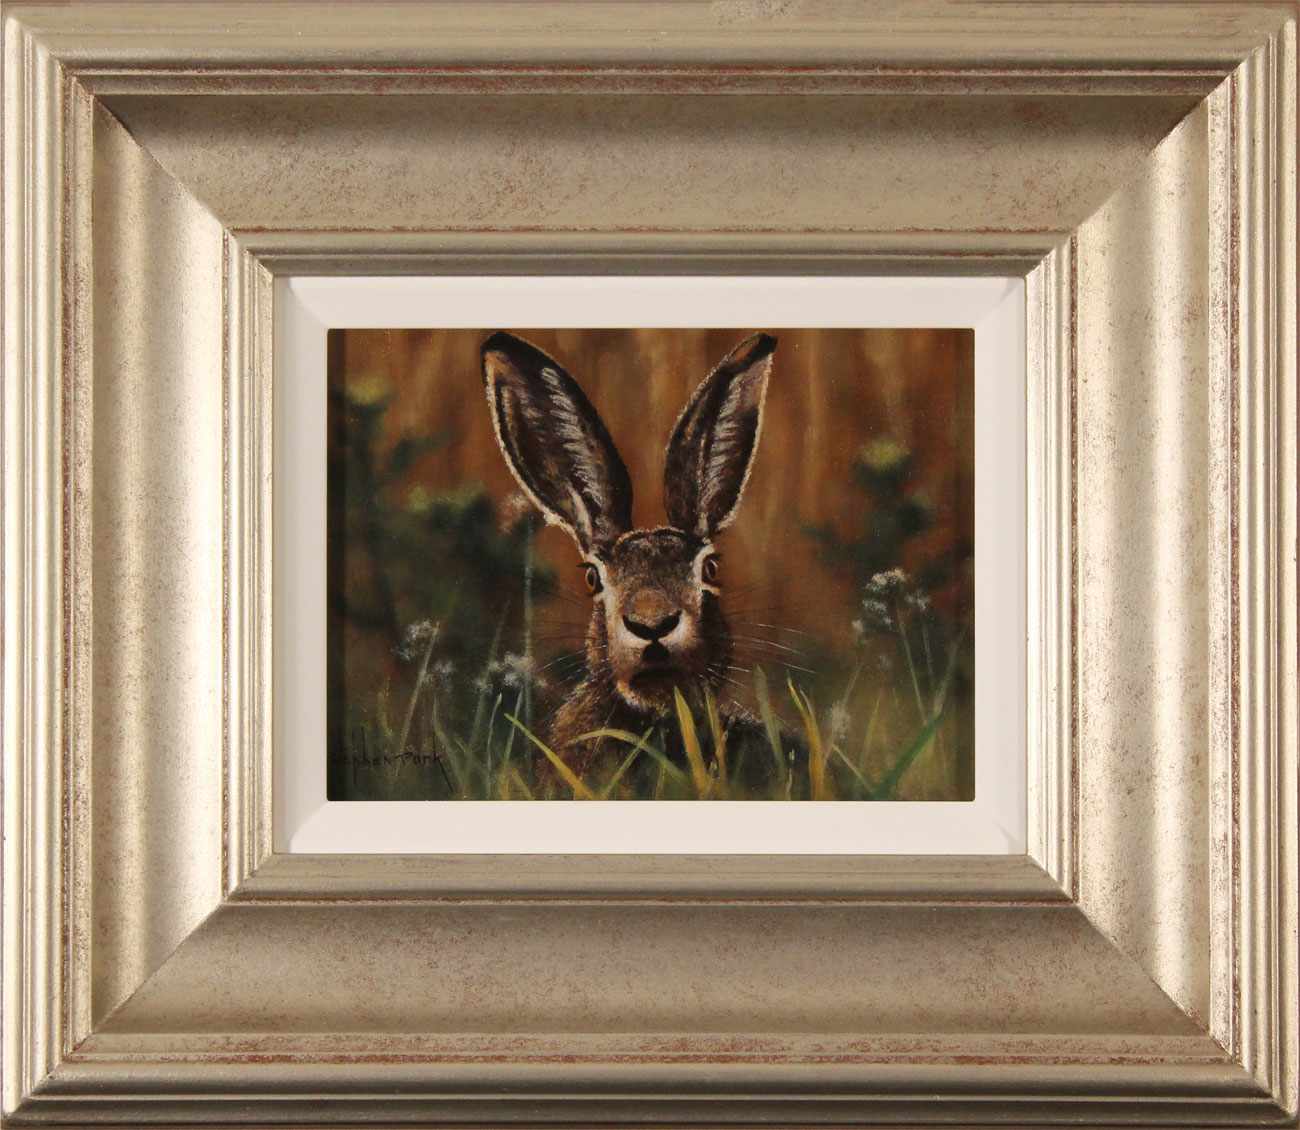 Stephen Park, Original oil painting on panel, Hare